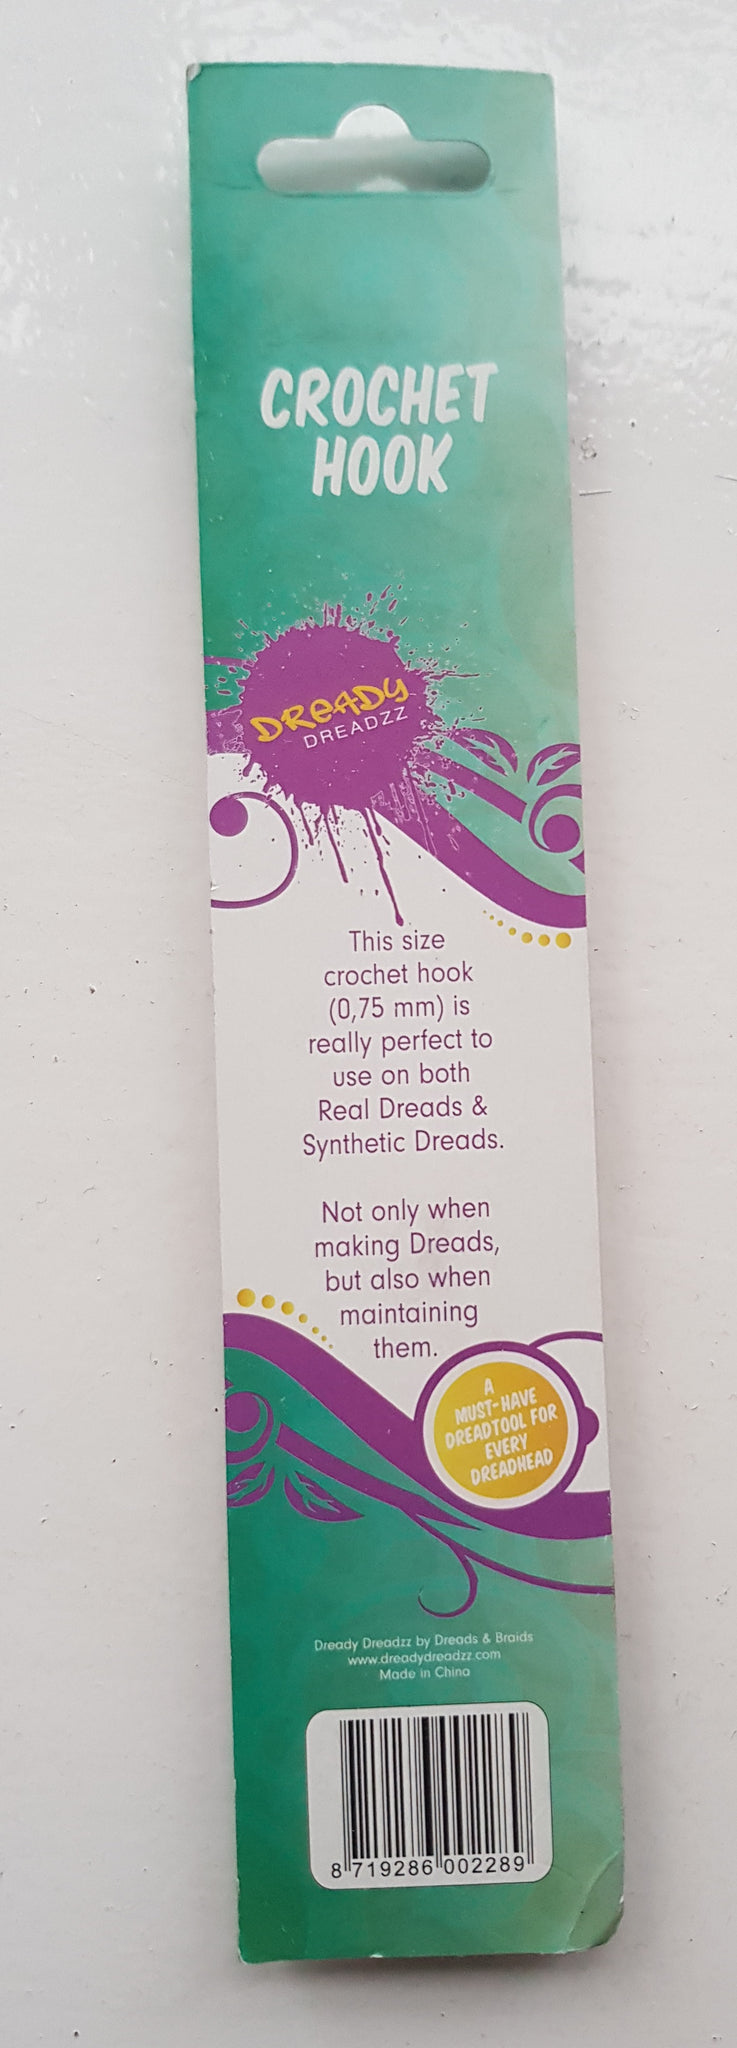 Dready Dreadzz - Dreadlocks Crochet Hook 0.75mm (Loose Hair Fixing Tool)